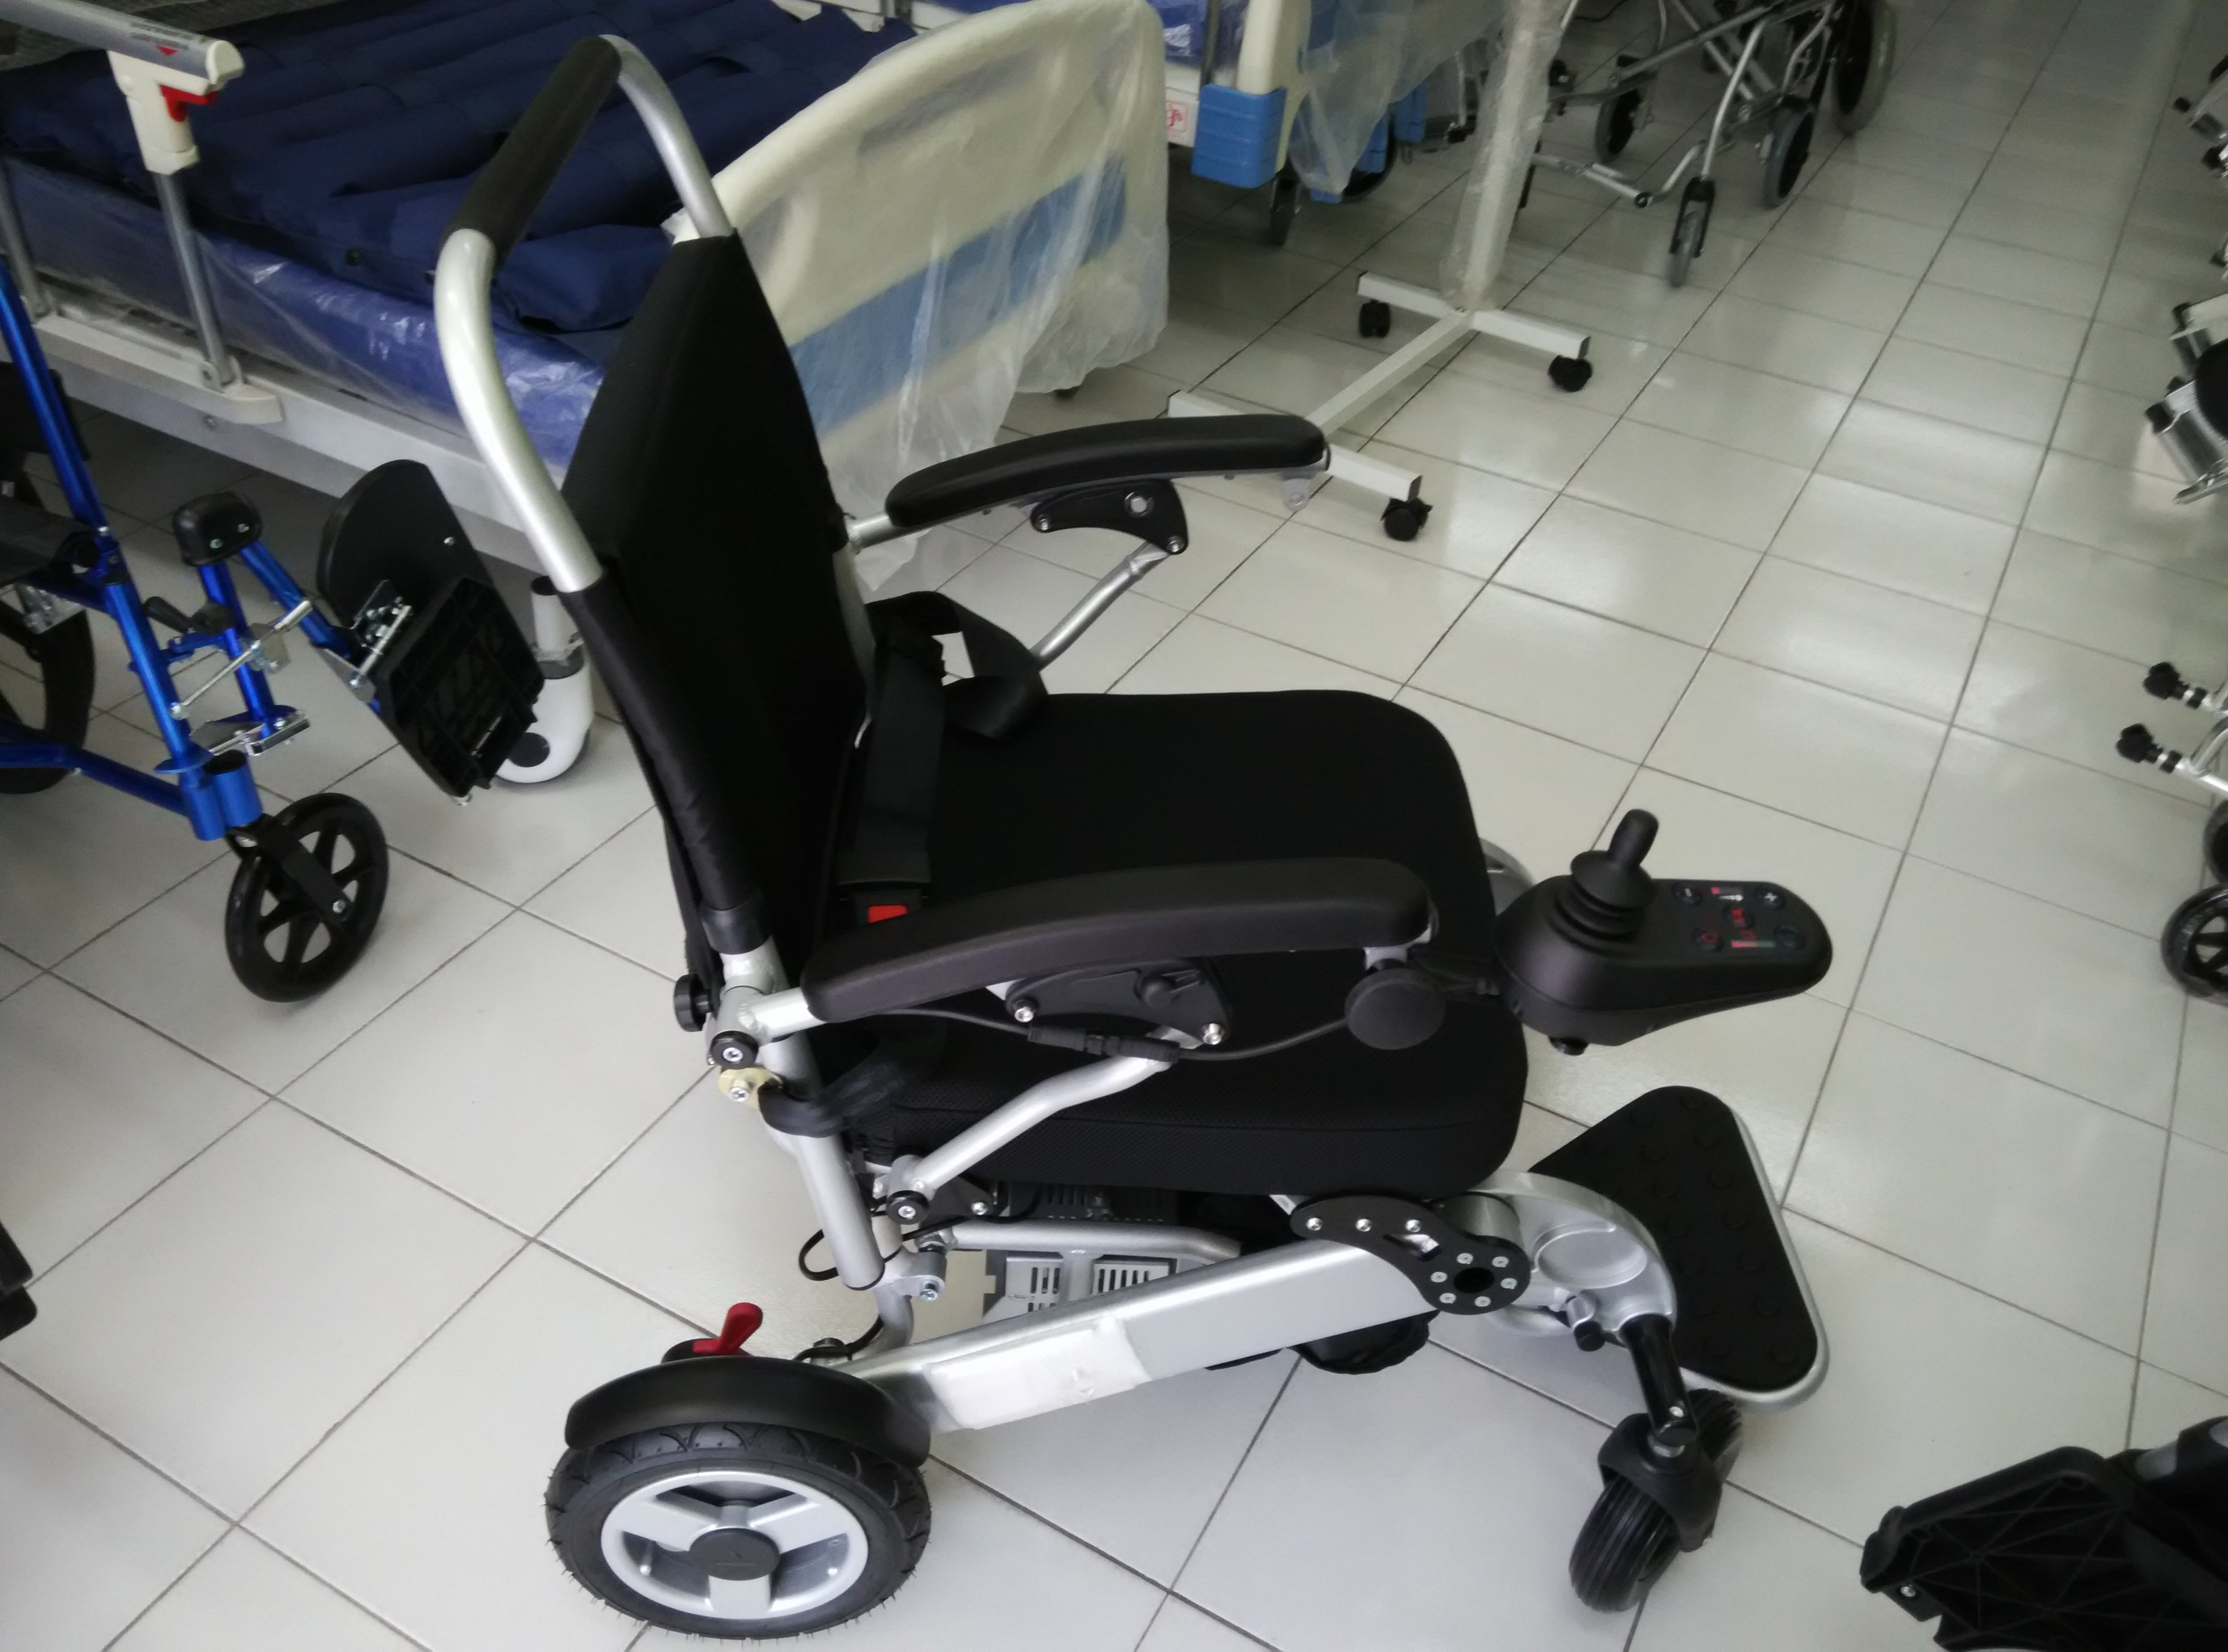 Lightest Electric Wheelchair